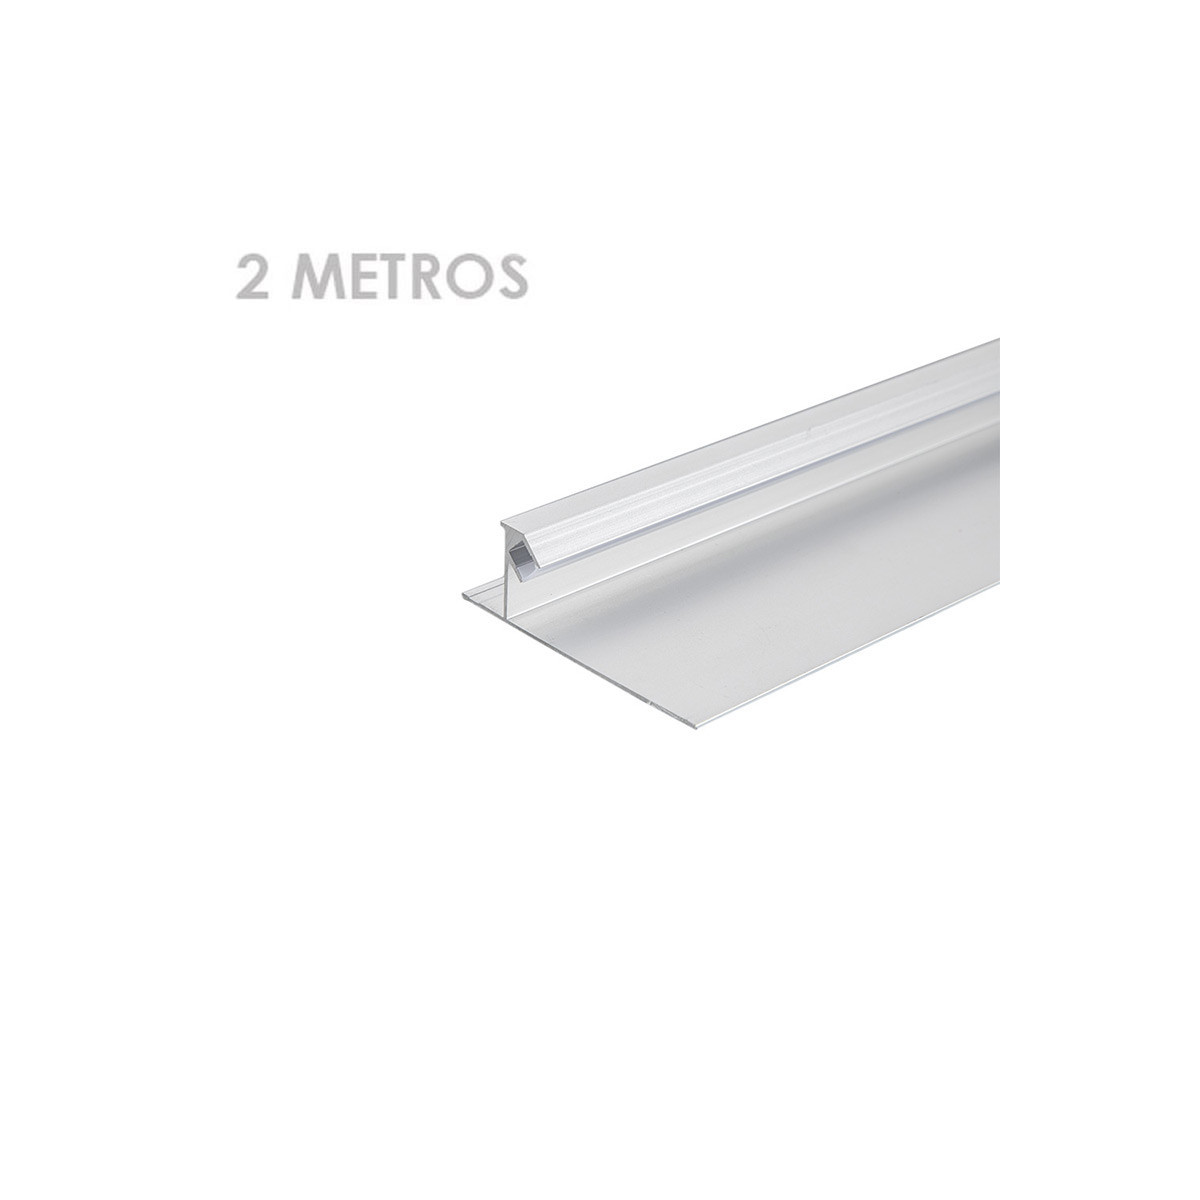 Aluminium profile led strip 2m for baseboard - indirect light